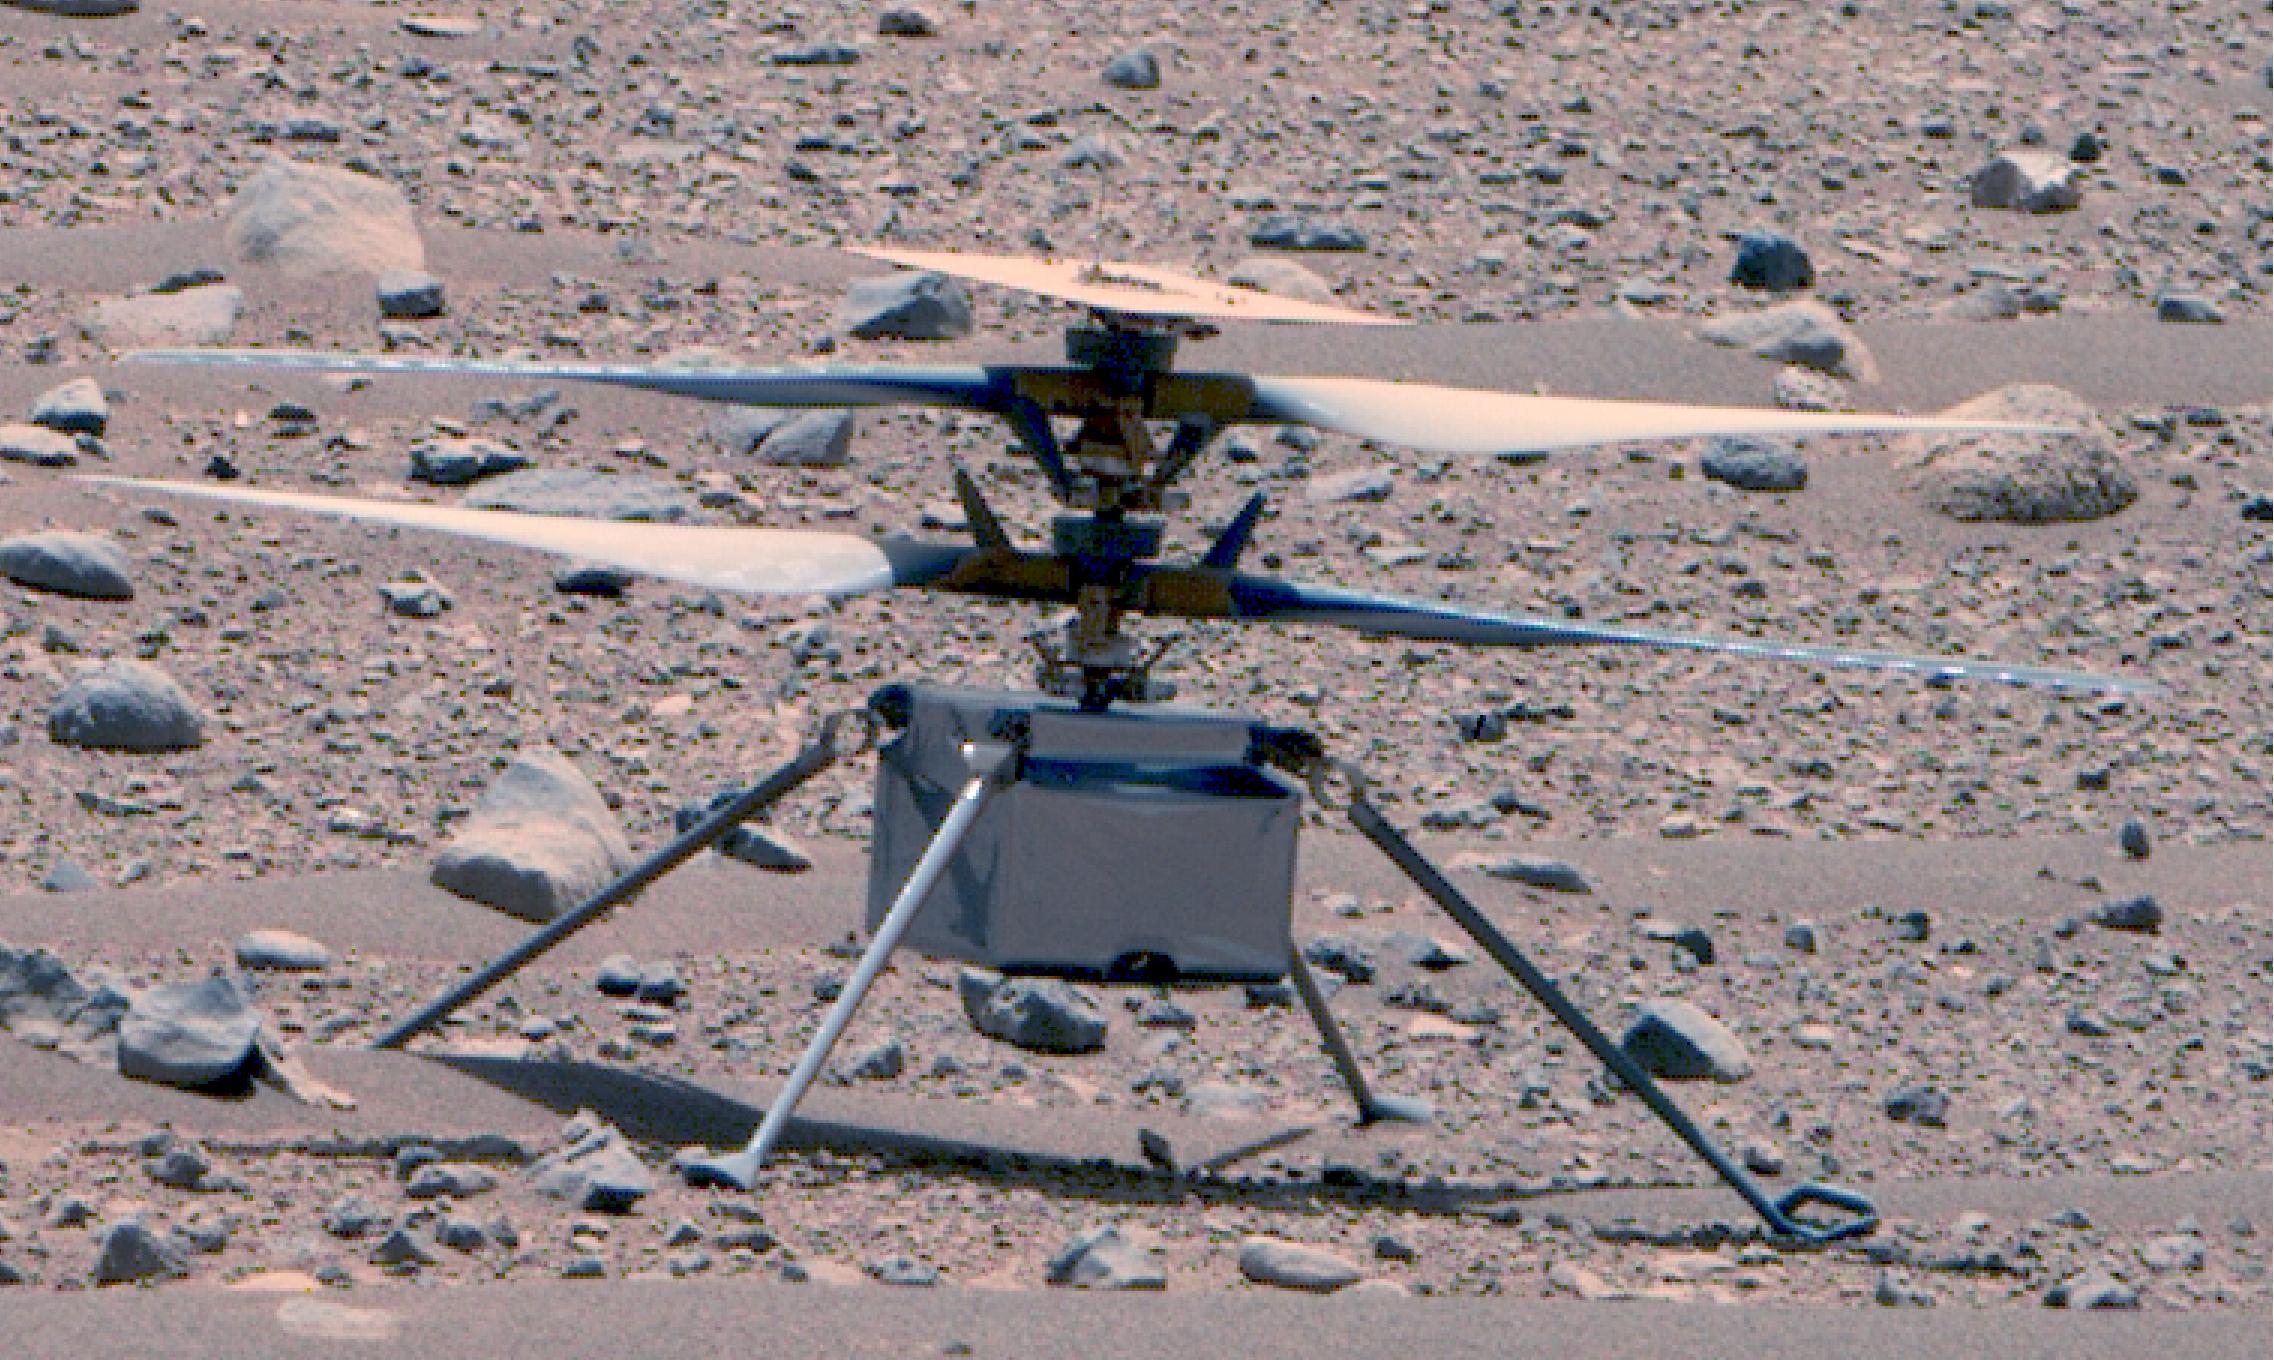 NASA Future Mars Helicopter Designs